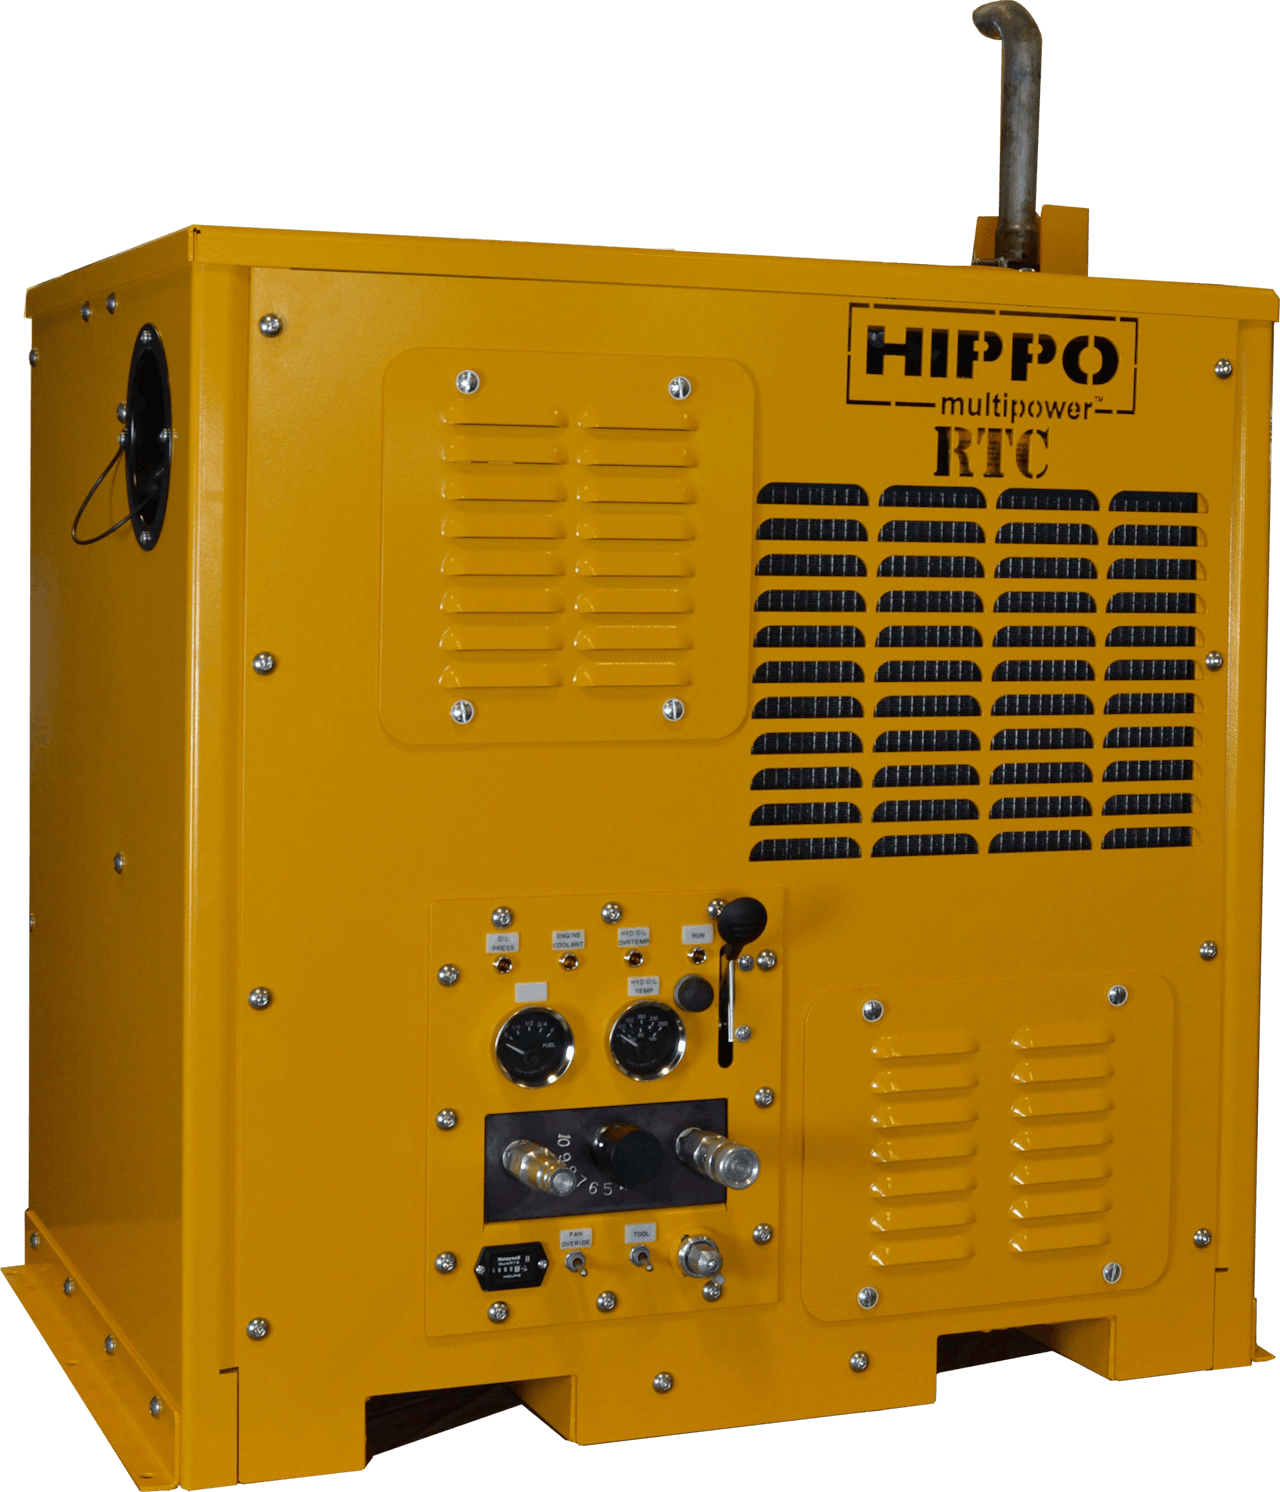 HIPPO Rugged Tool Circuit (RTC) Hydraulic Power Pack